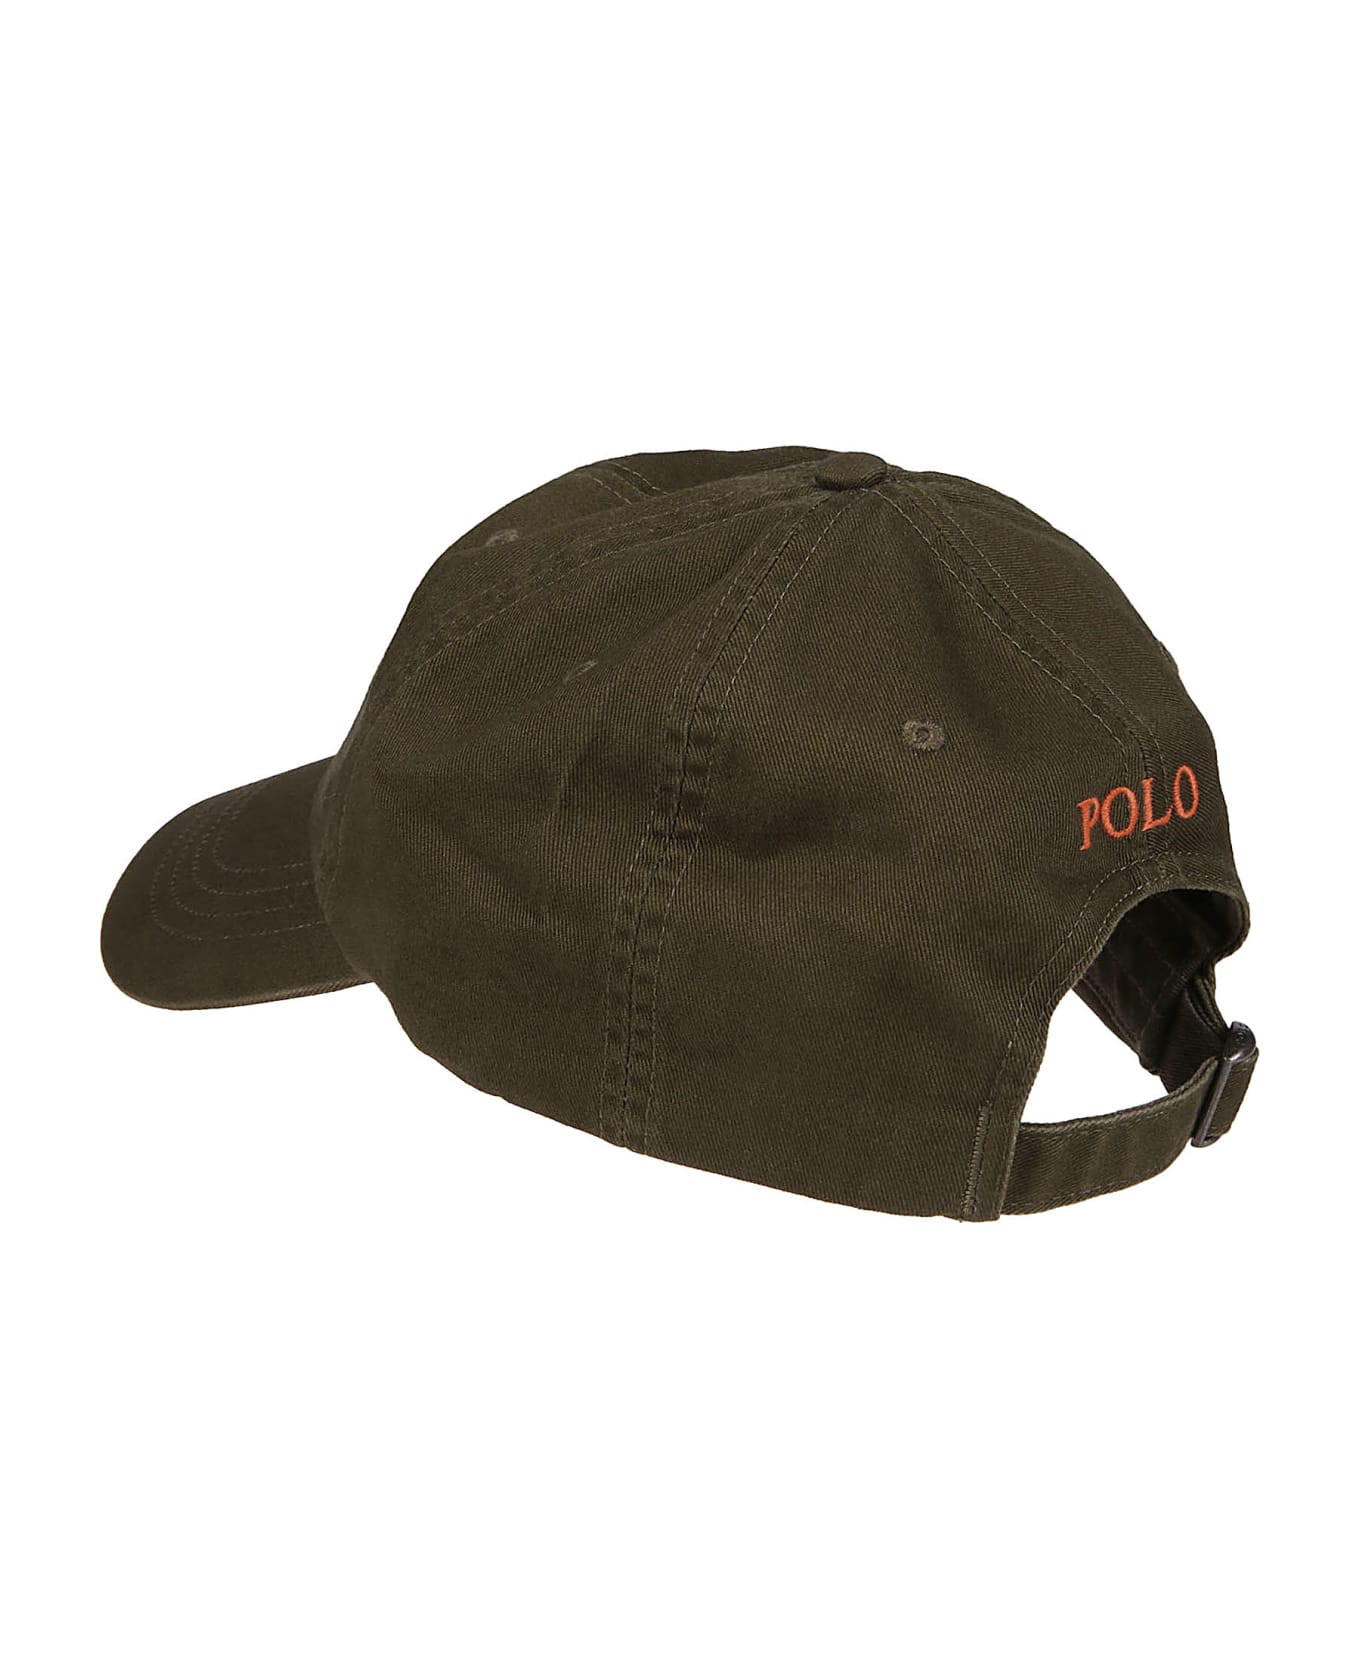 Polo Ralph Lauren Baseball Cap - Canopy Olive